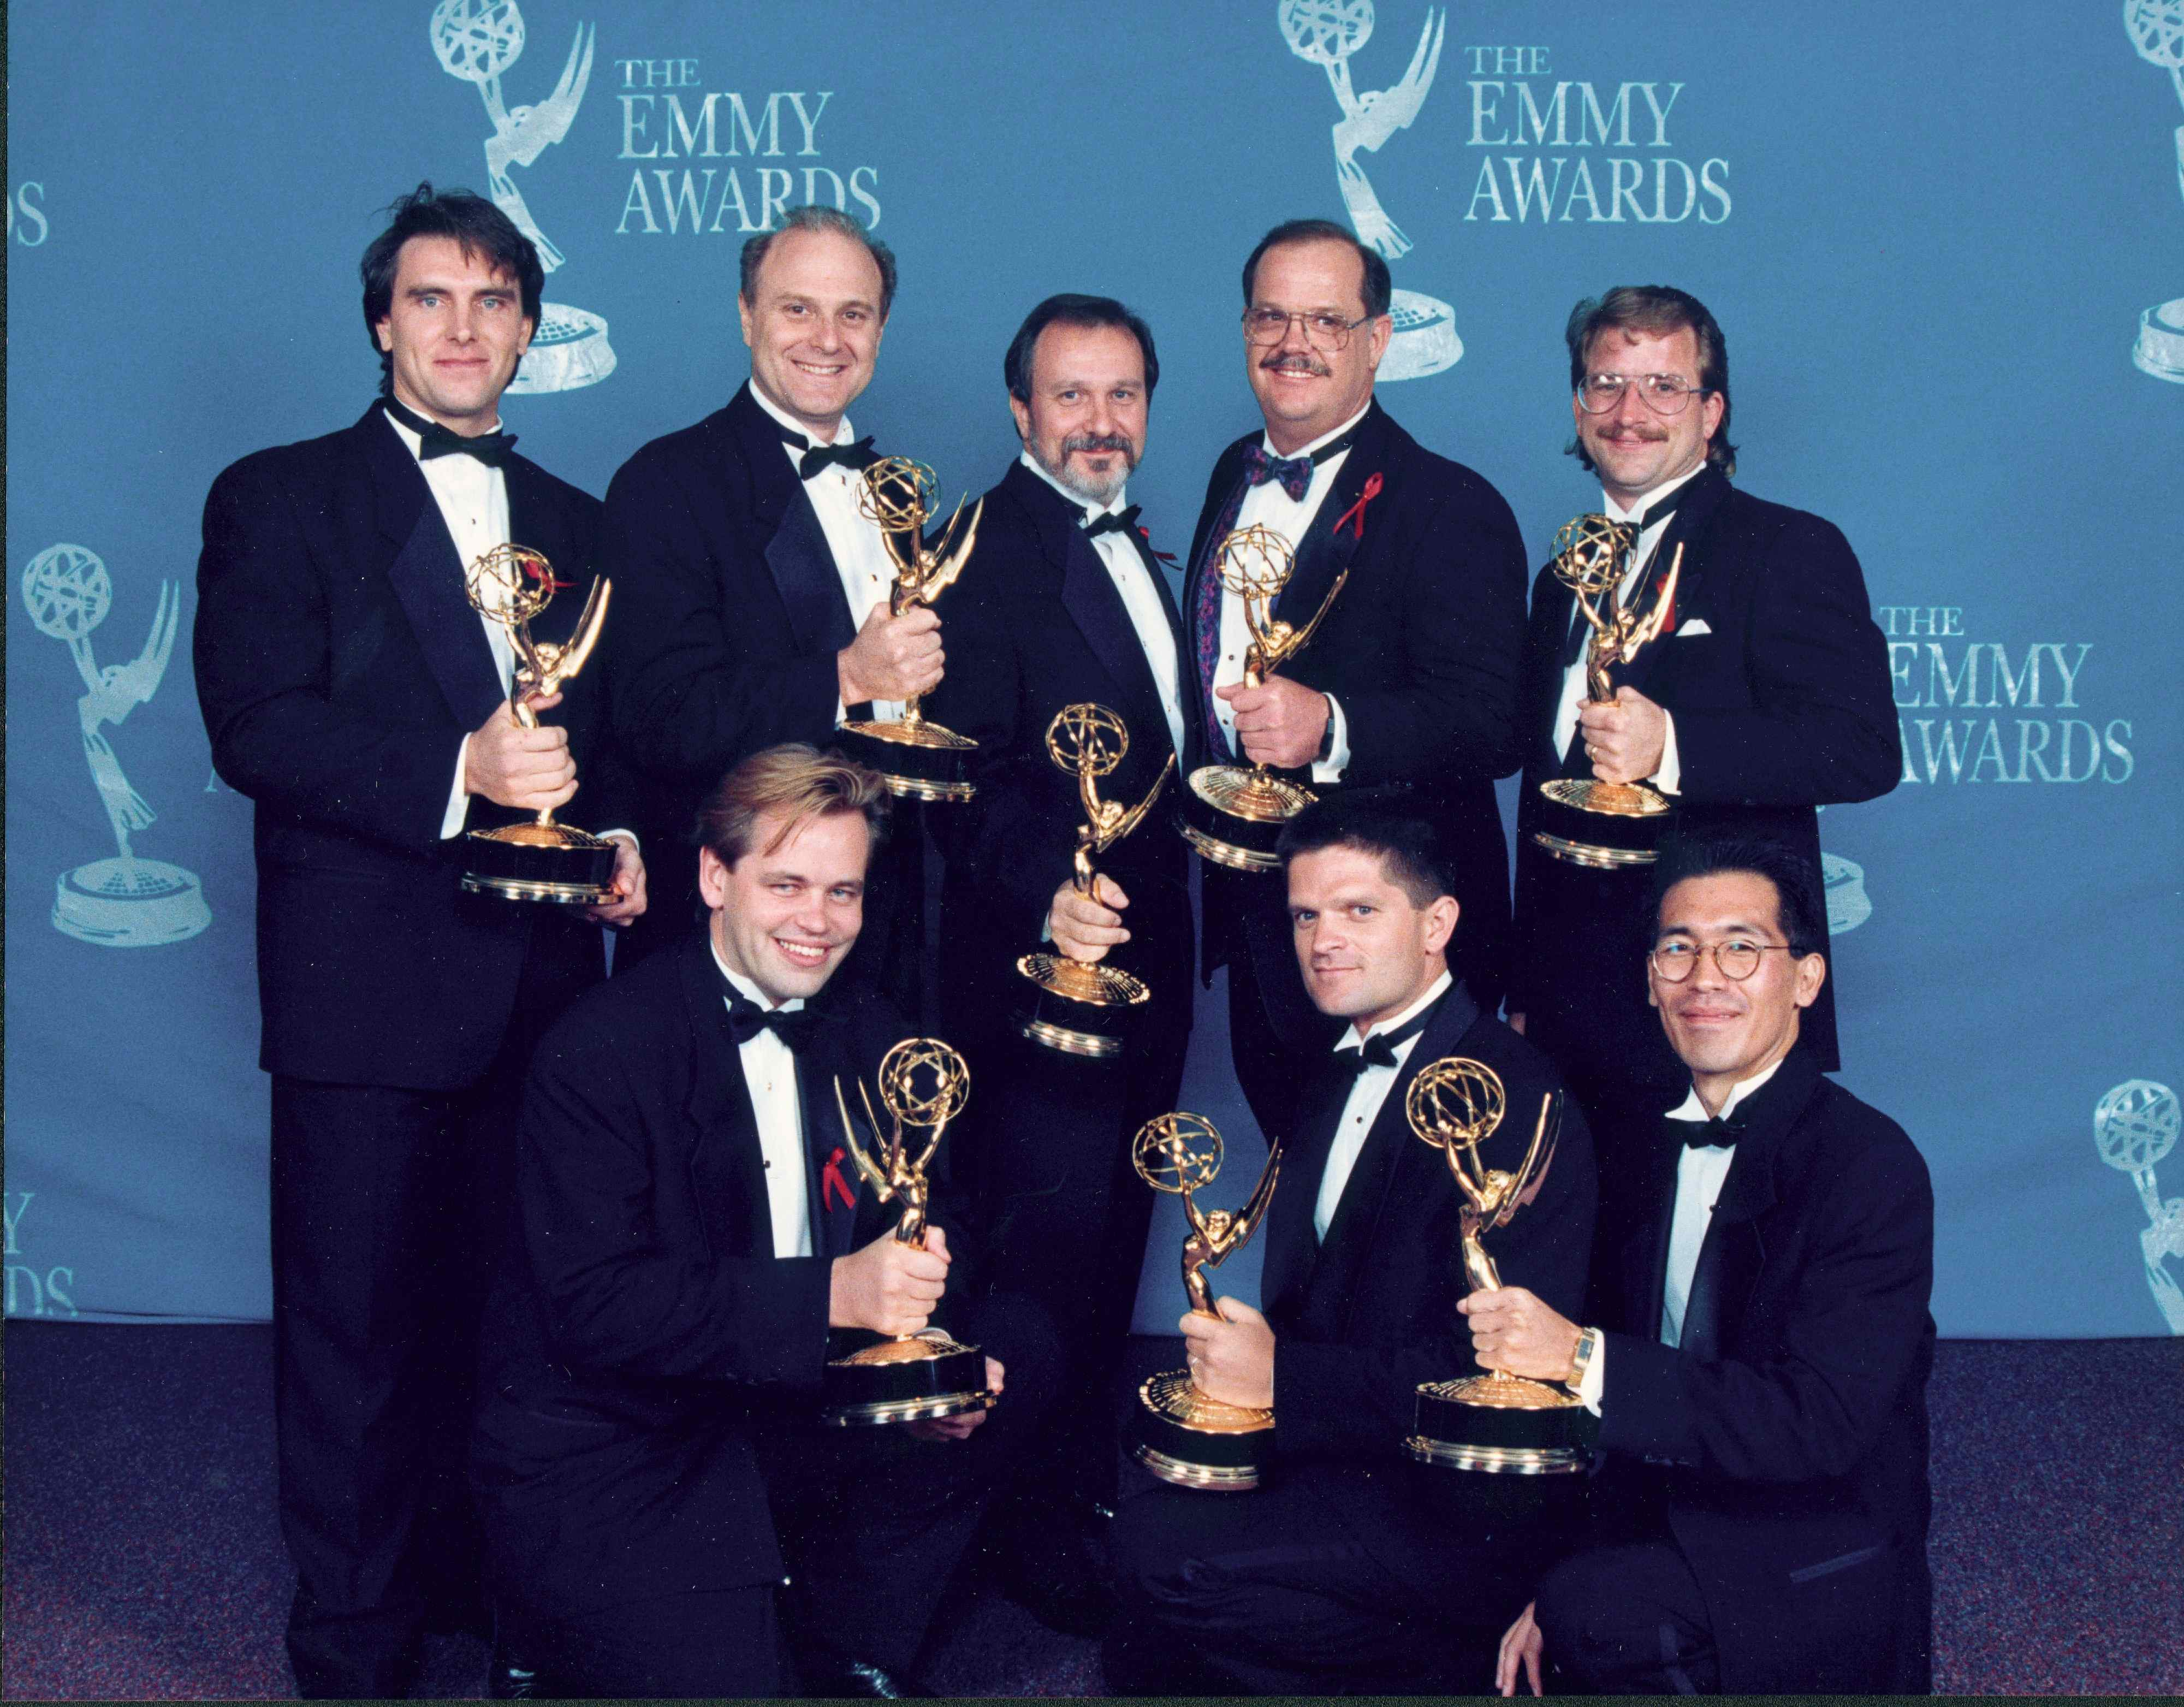 Emmy Awards 1992